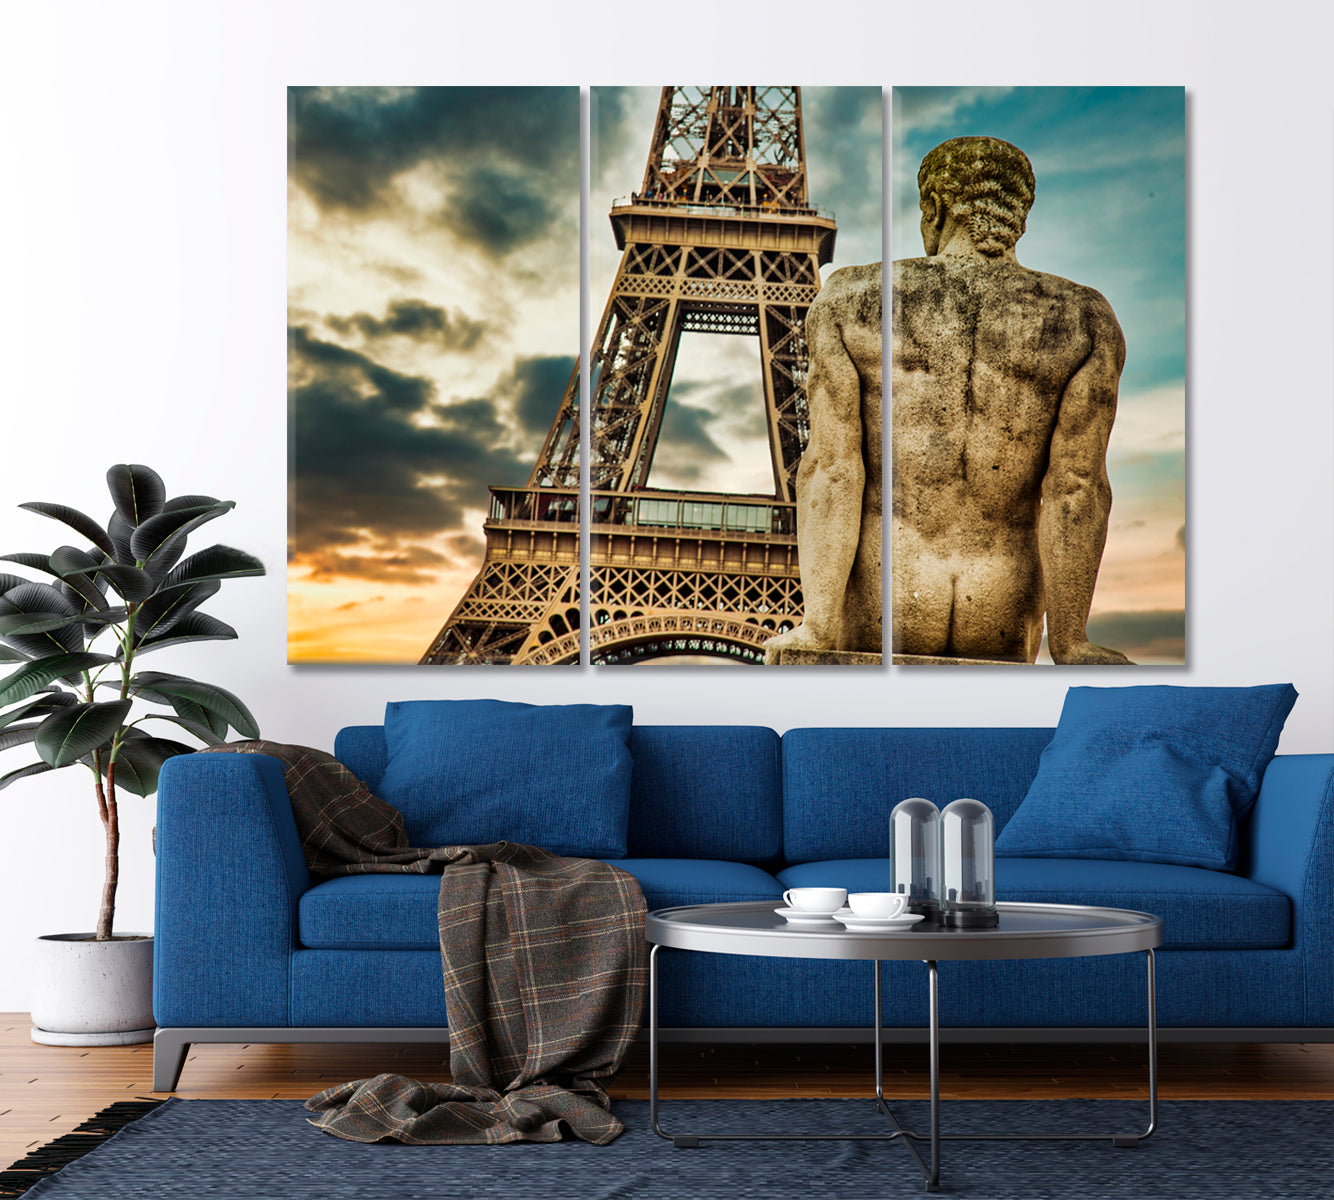 Place of Trocadero Eiffel Tower Paris France Cities Wall Art Artesty 3 panels 36" x 24" 